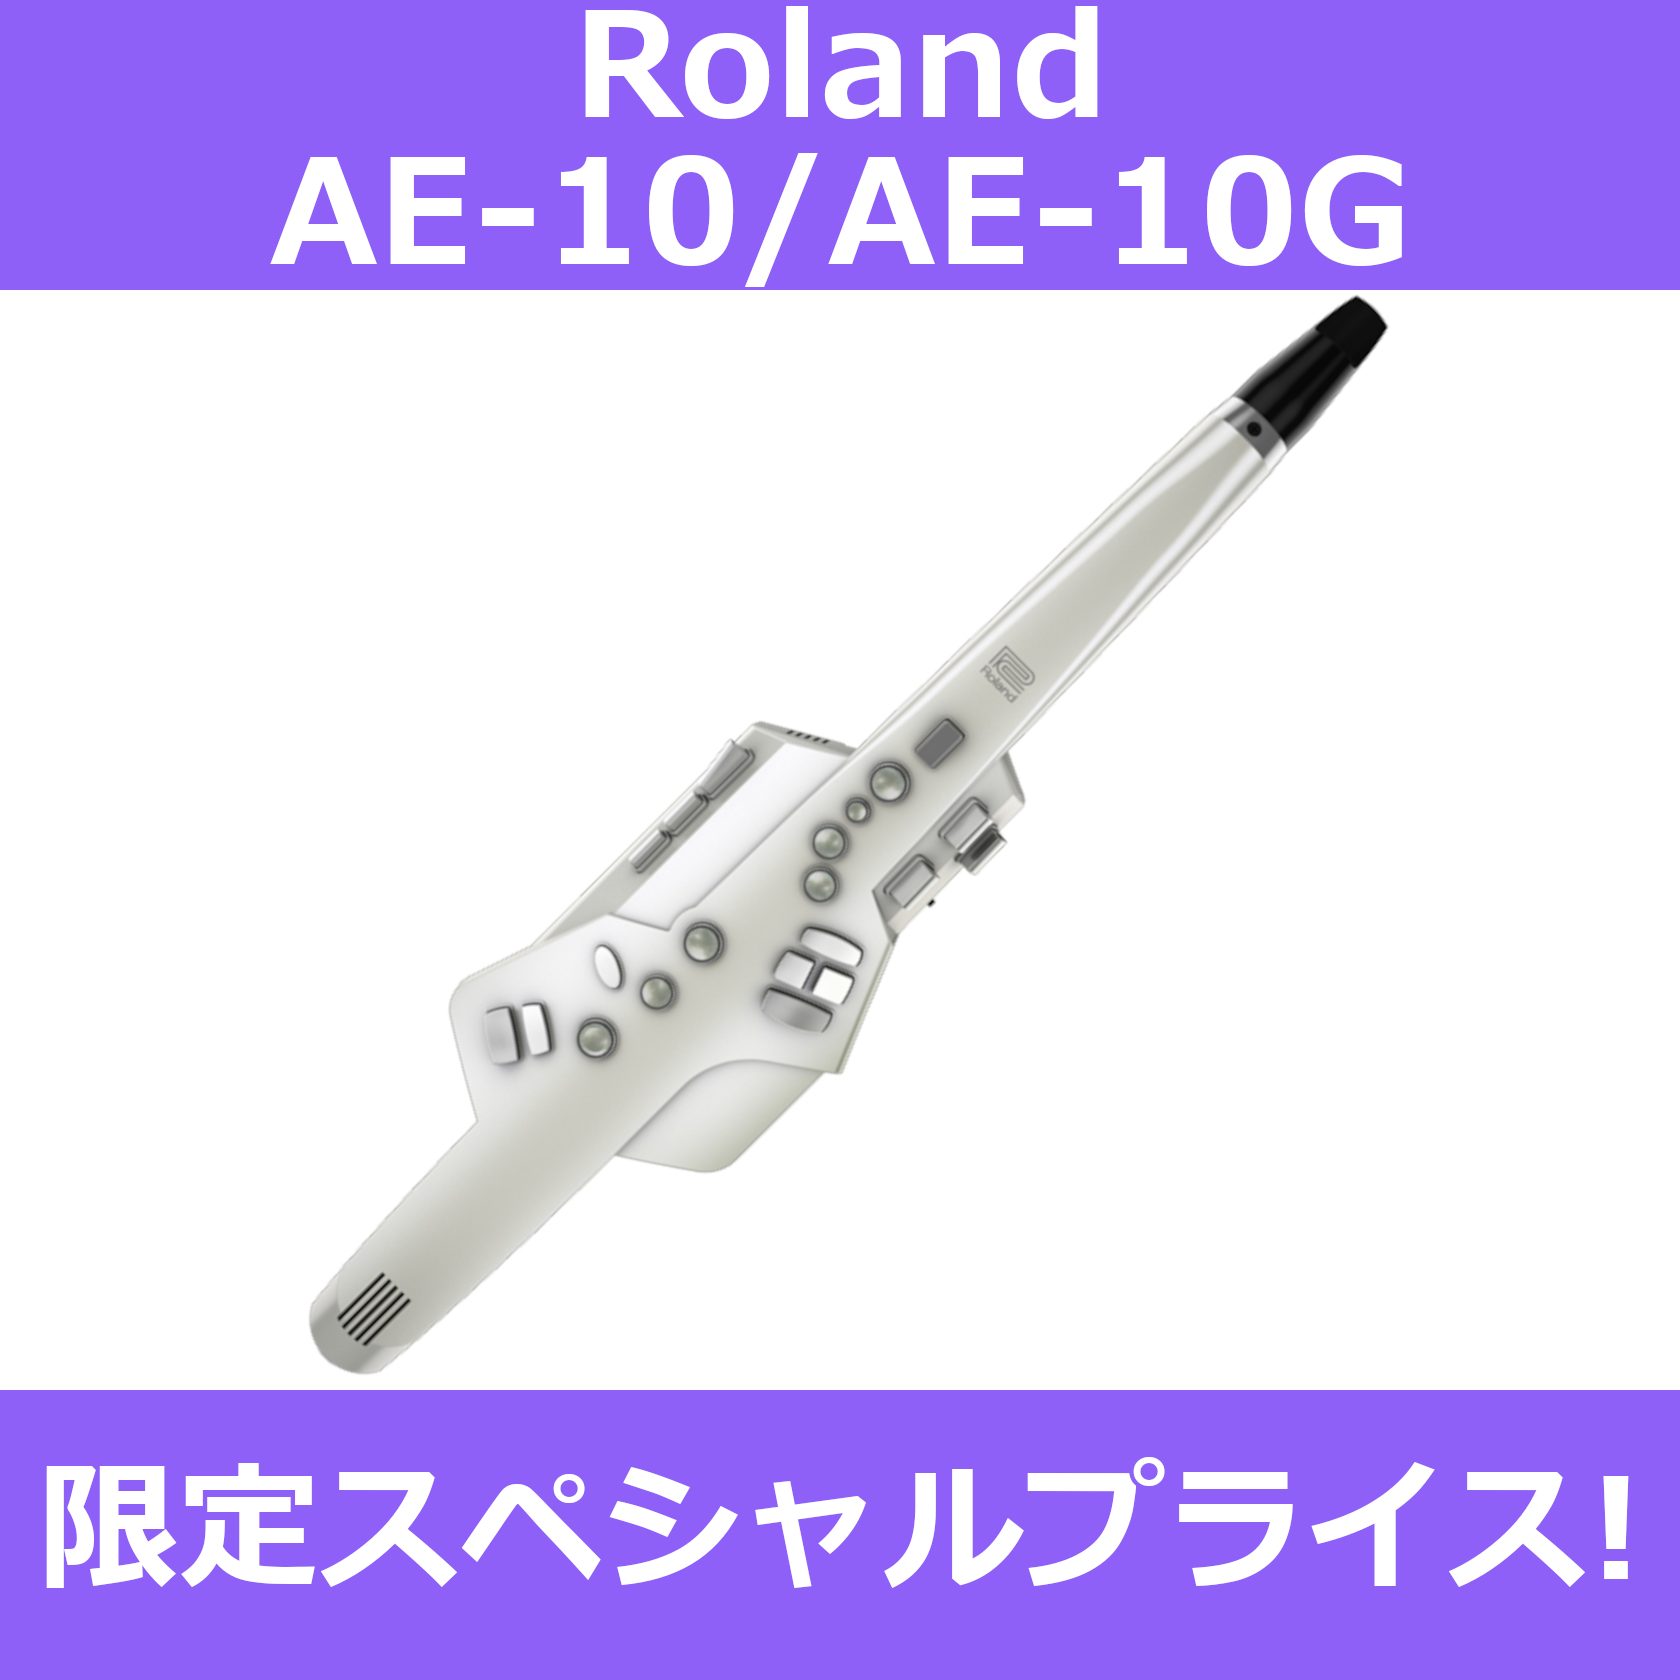 Roland  aerophone  AE-10G  エアロフォン